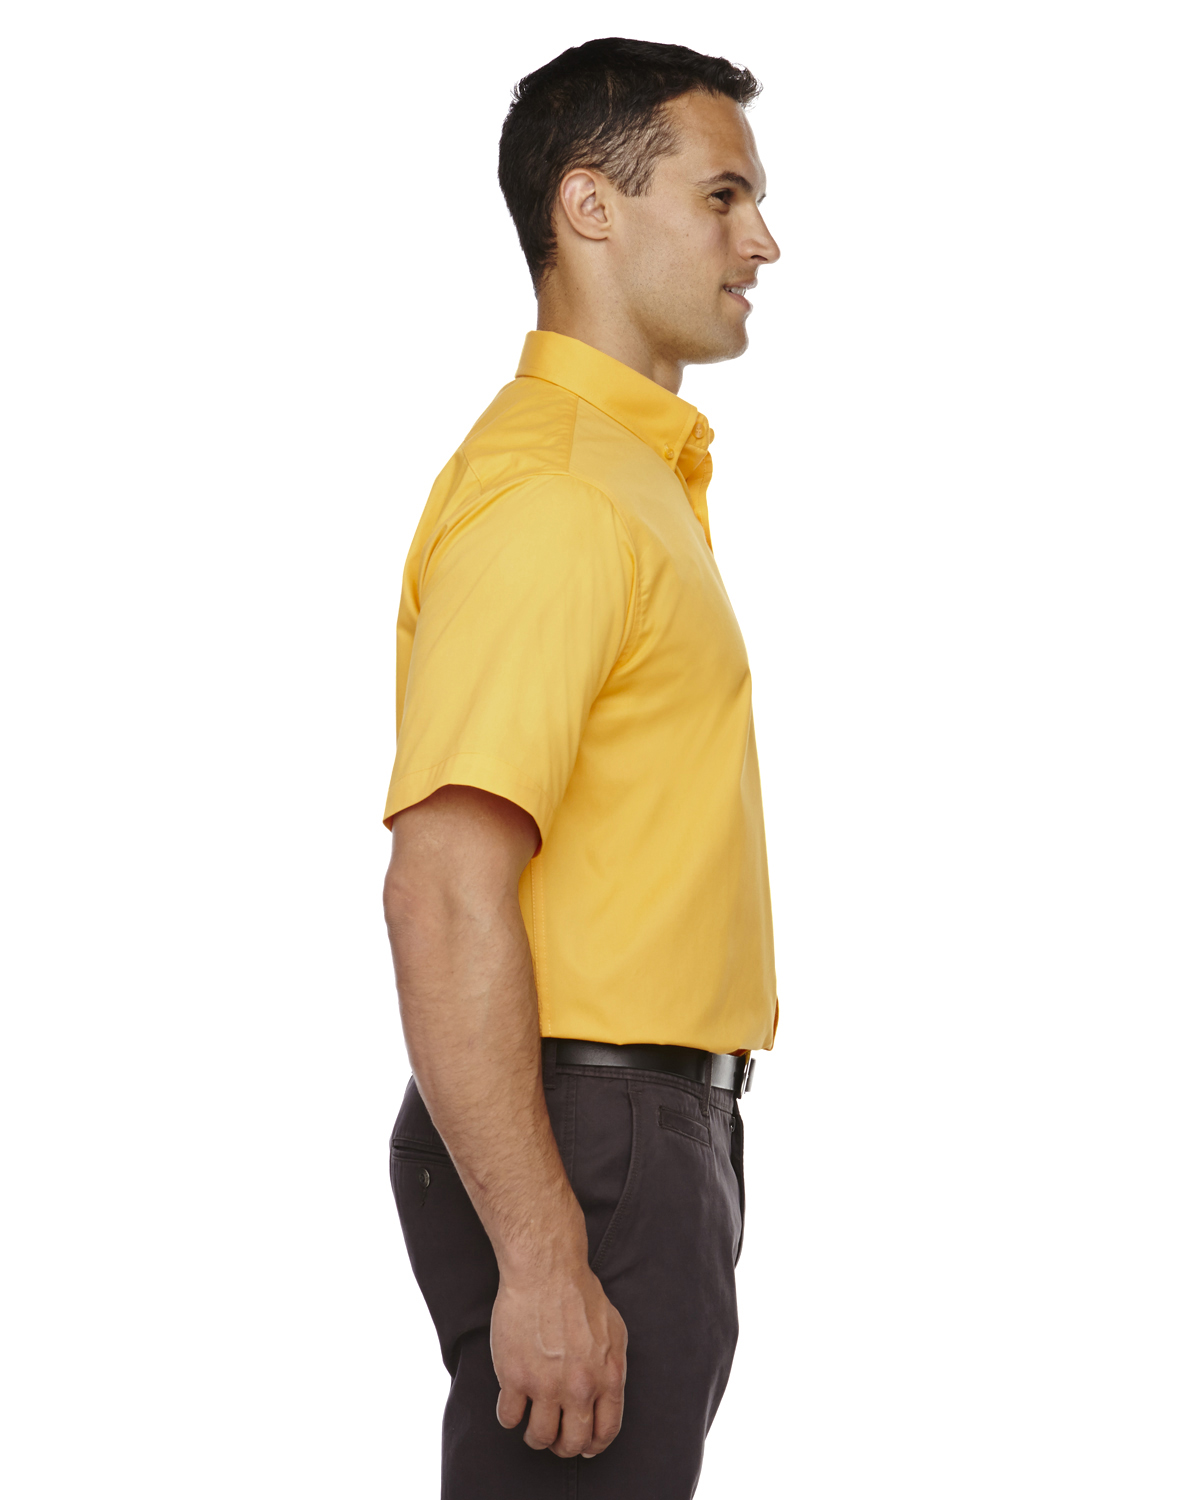 Core 365 88194 Men's Optimum Short-Sleeve Twill Shirt - image 2 of 2